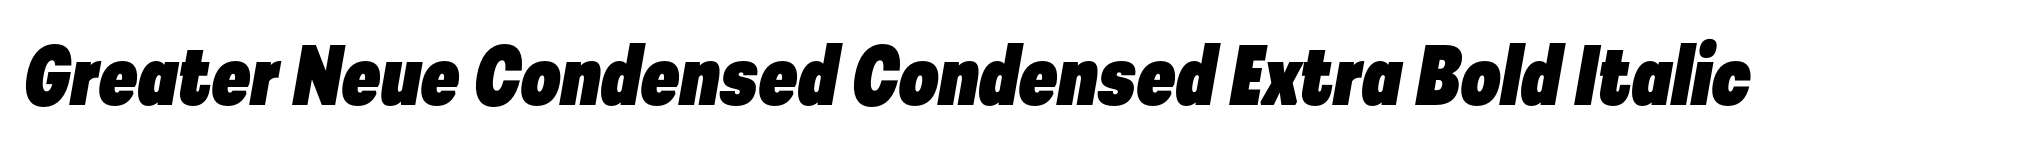 Greater Neue Condensed Condensed Extra Bold Italic image